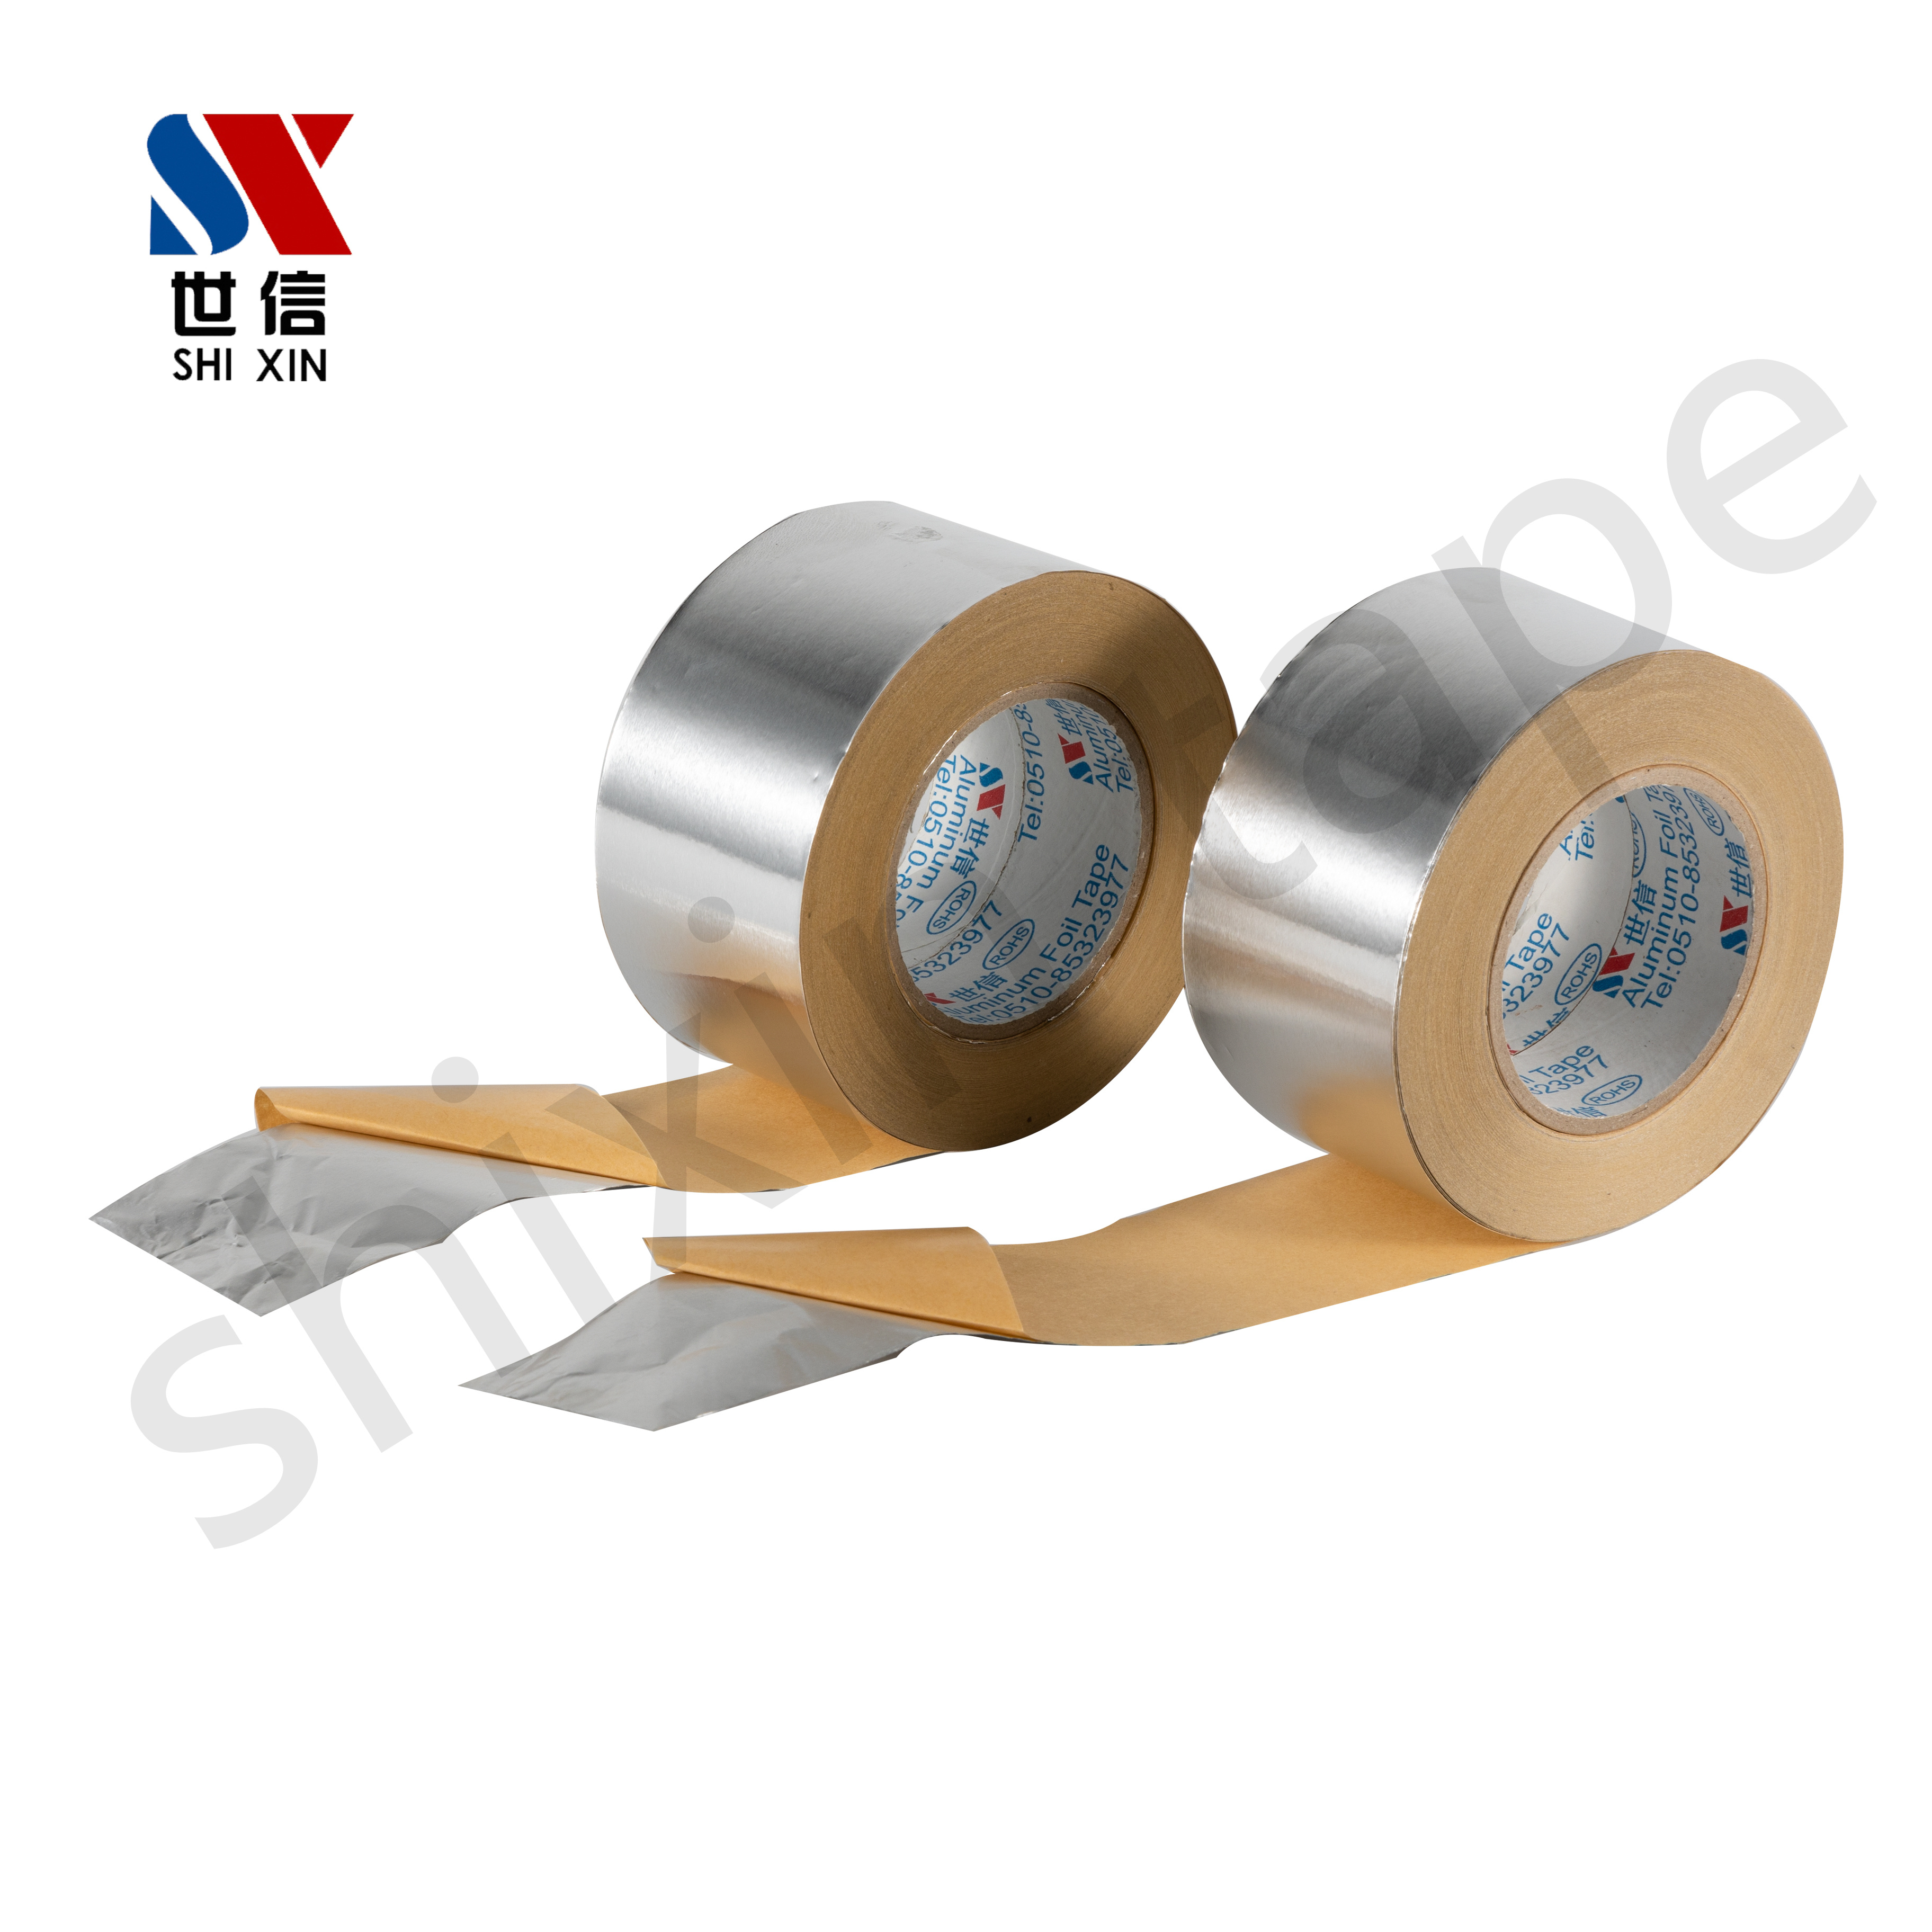 Aluminum foil tape with liner